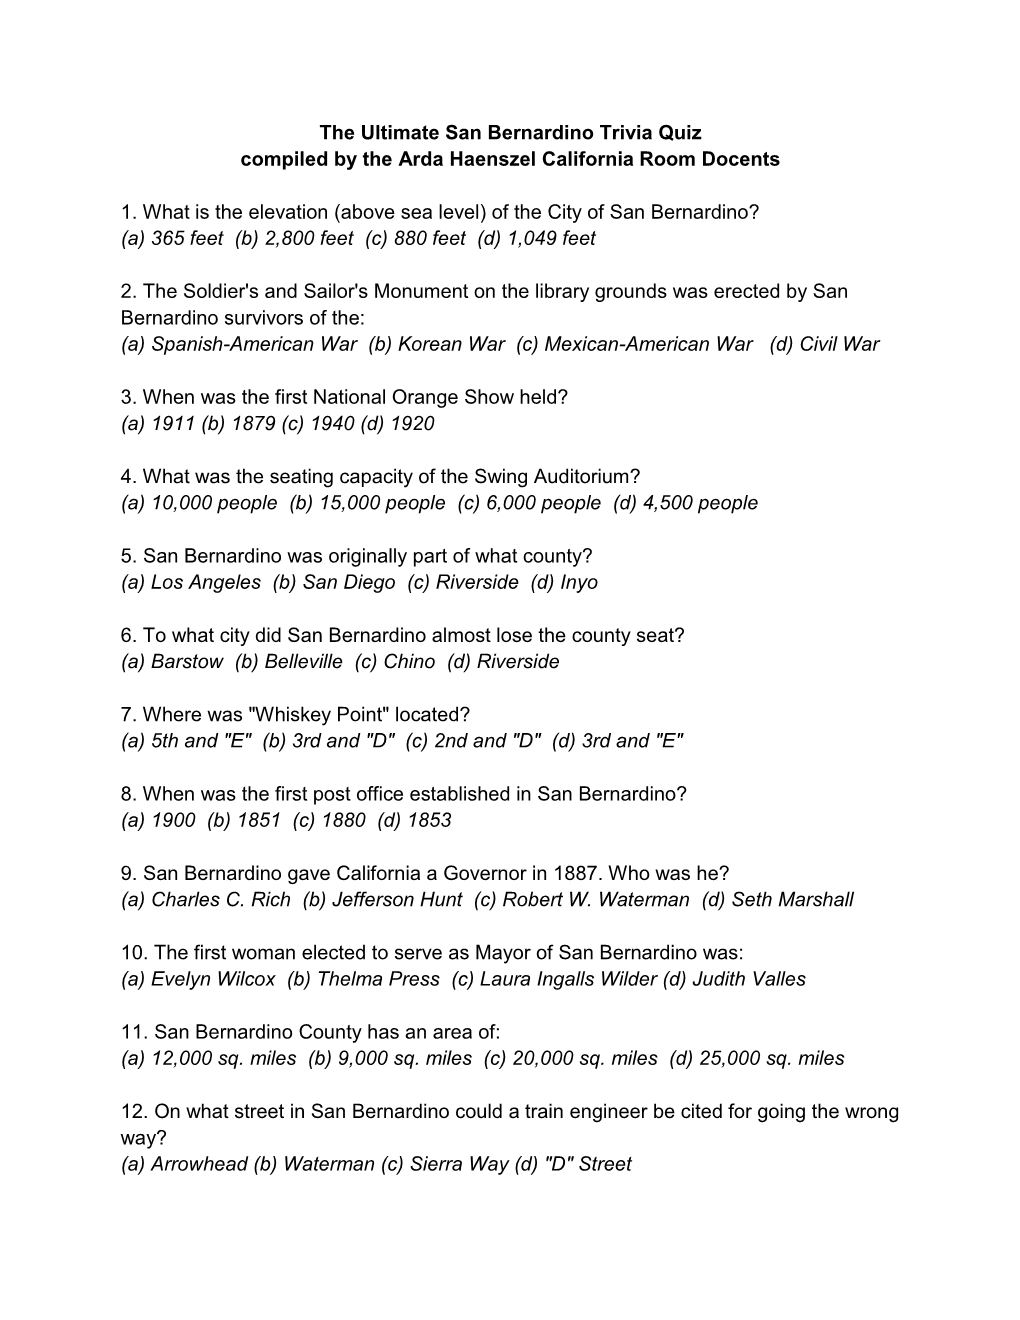 The Ultimate San Bernardino Trivia Quiz Compiled by the Arda Haenszel California Room Docents